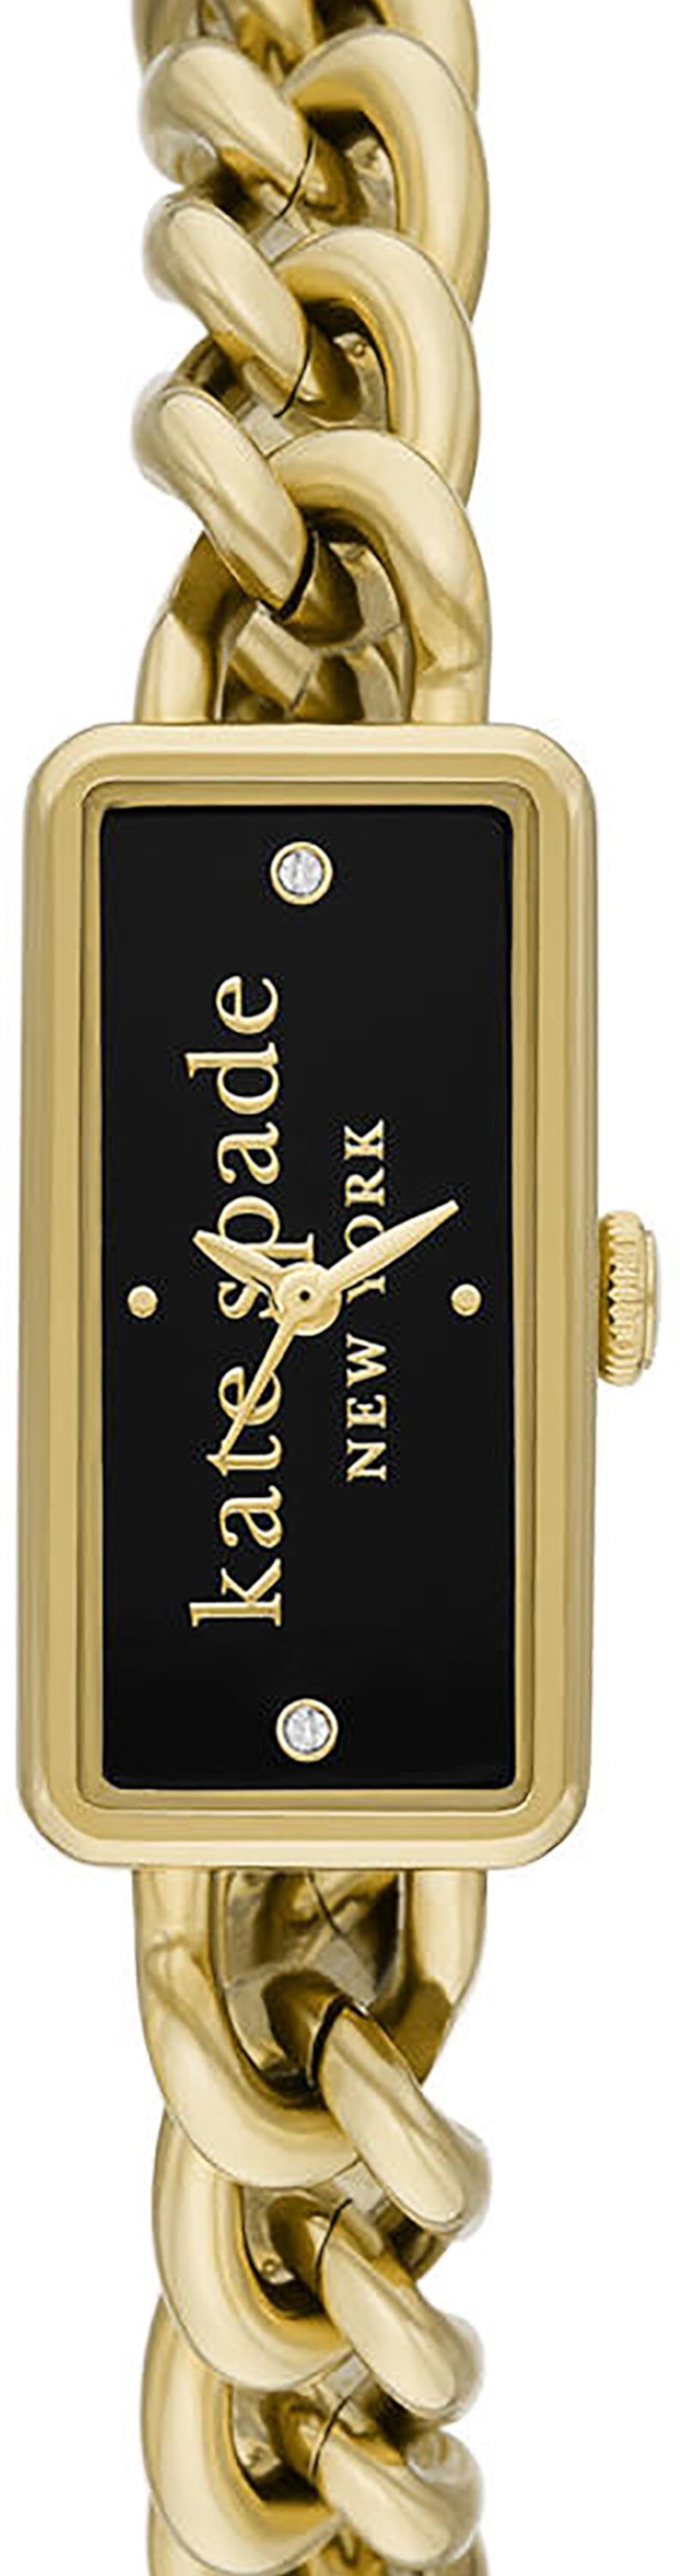 Часы Rosedale с тремя стрелками из нержавеющей стали — KSW1793 Kate Spade New York